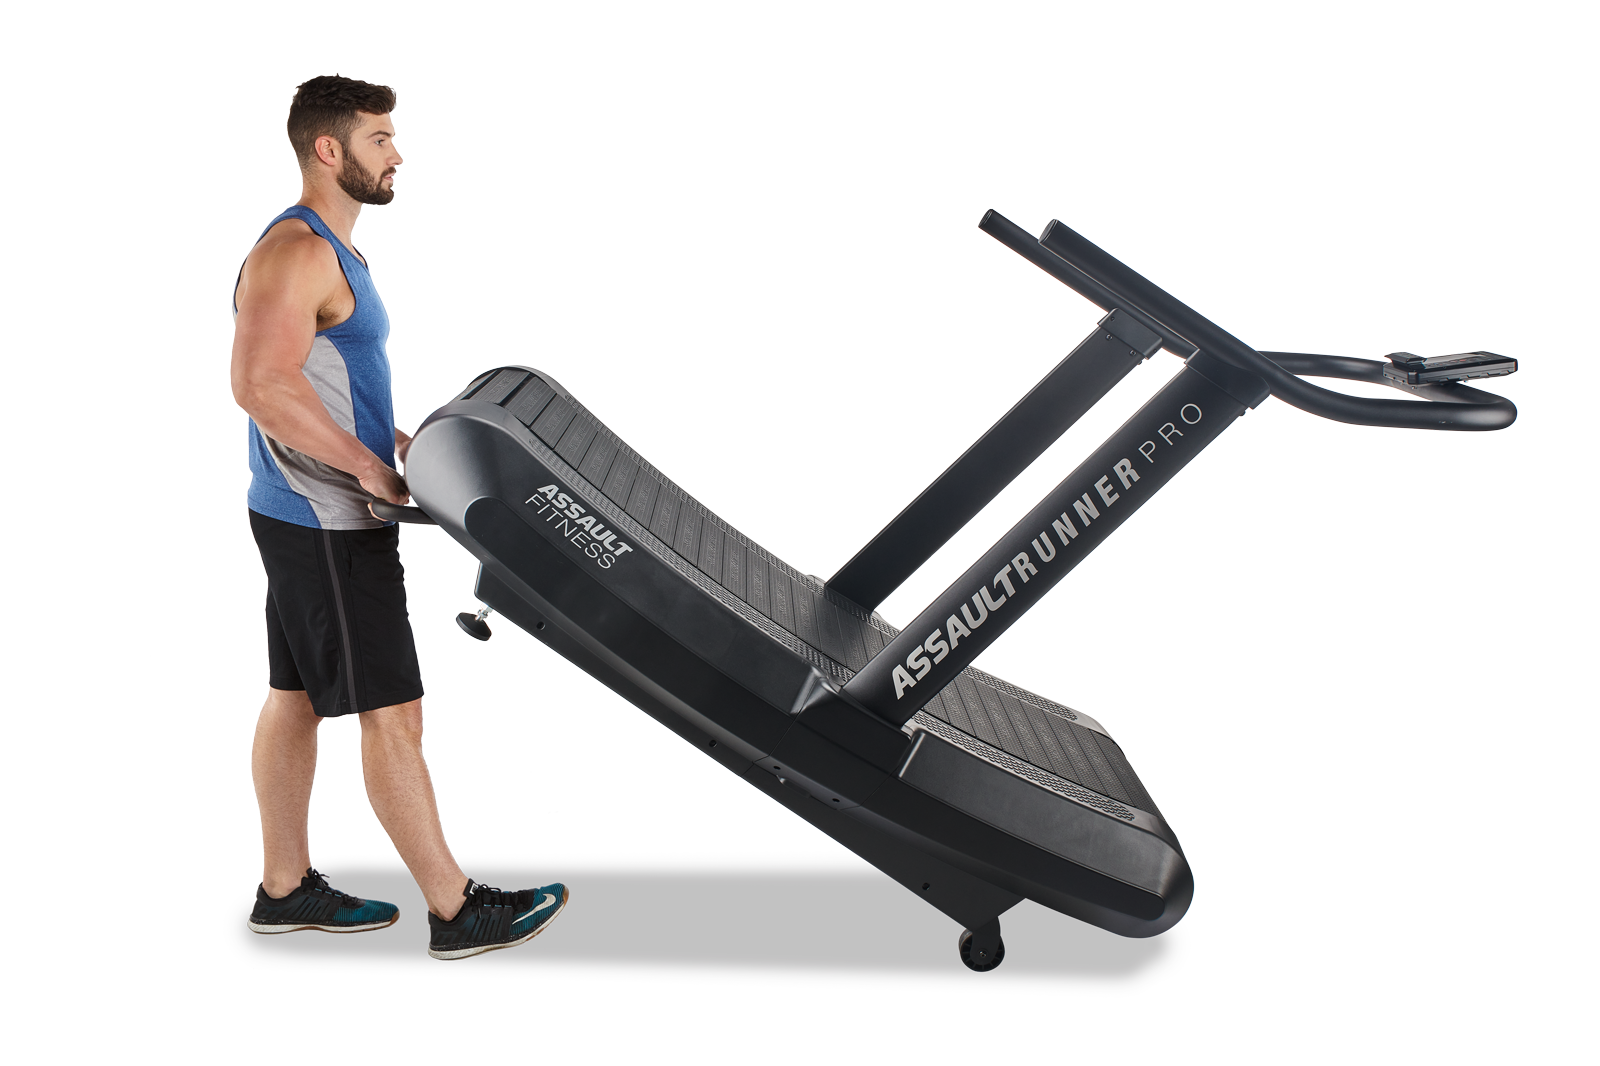 Assaultrunner pro treadmill easy to carry